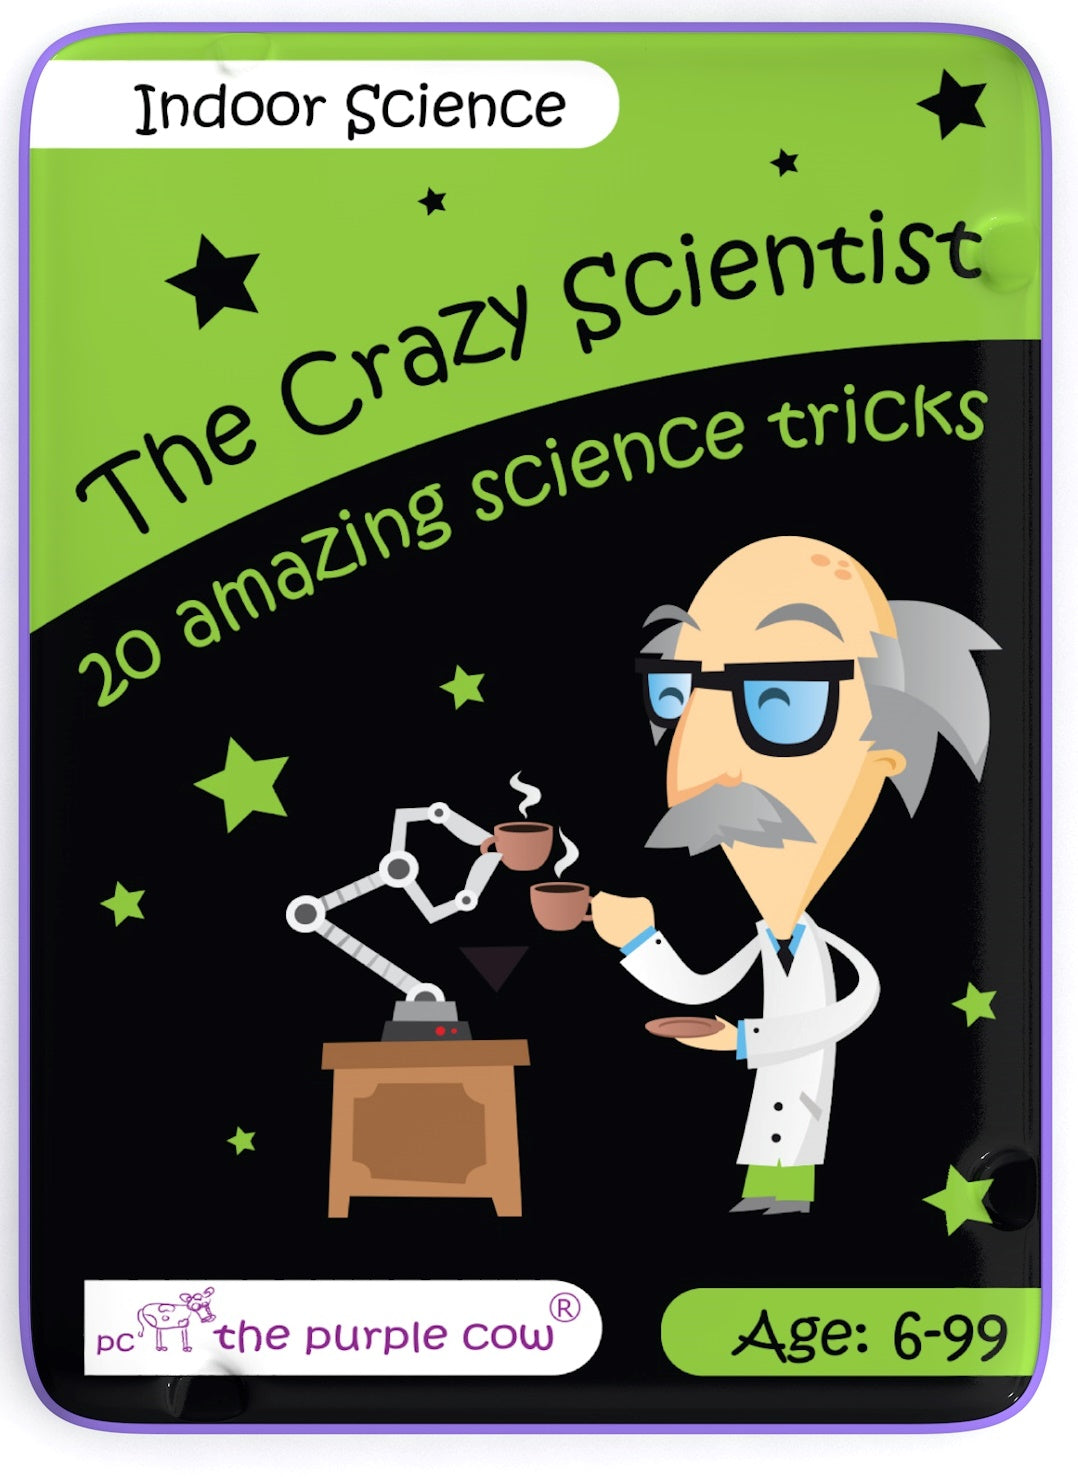 The Crazy Scientist